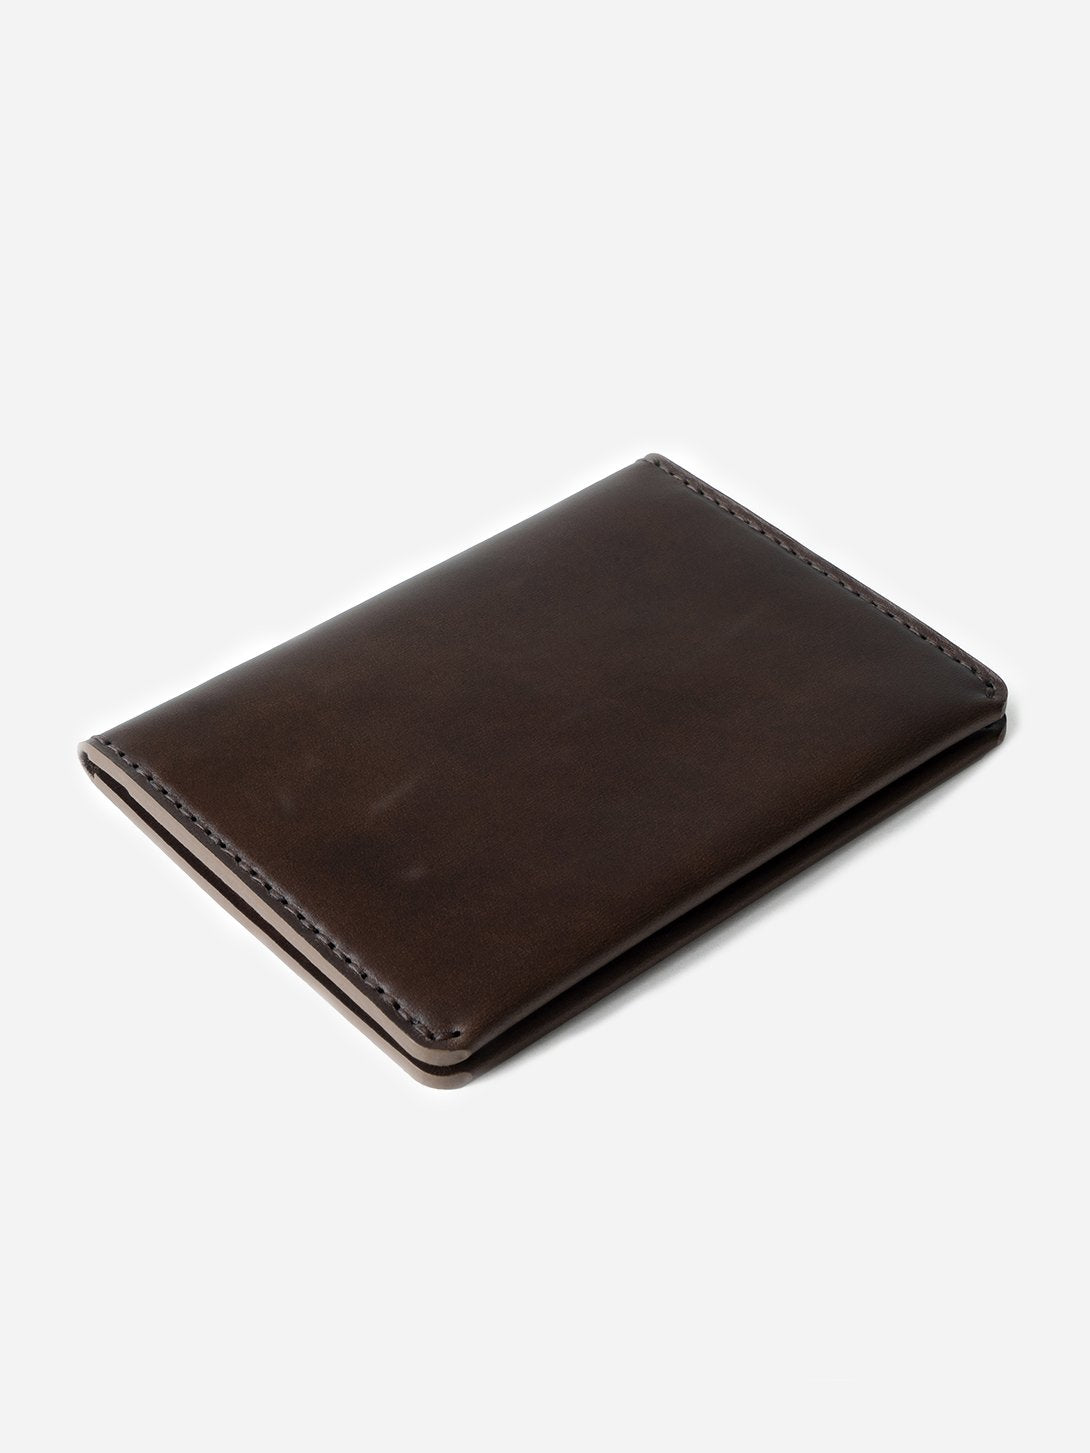 Leather Passport Wallet for Men